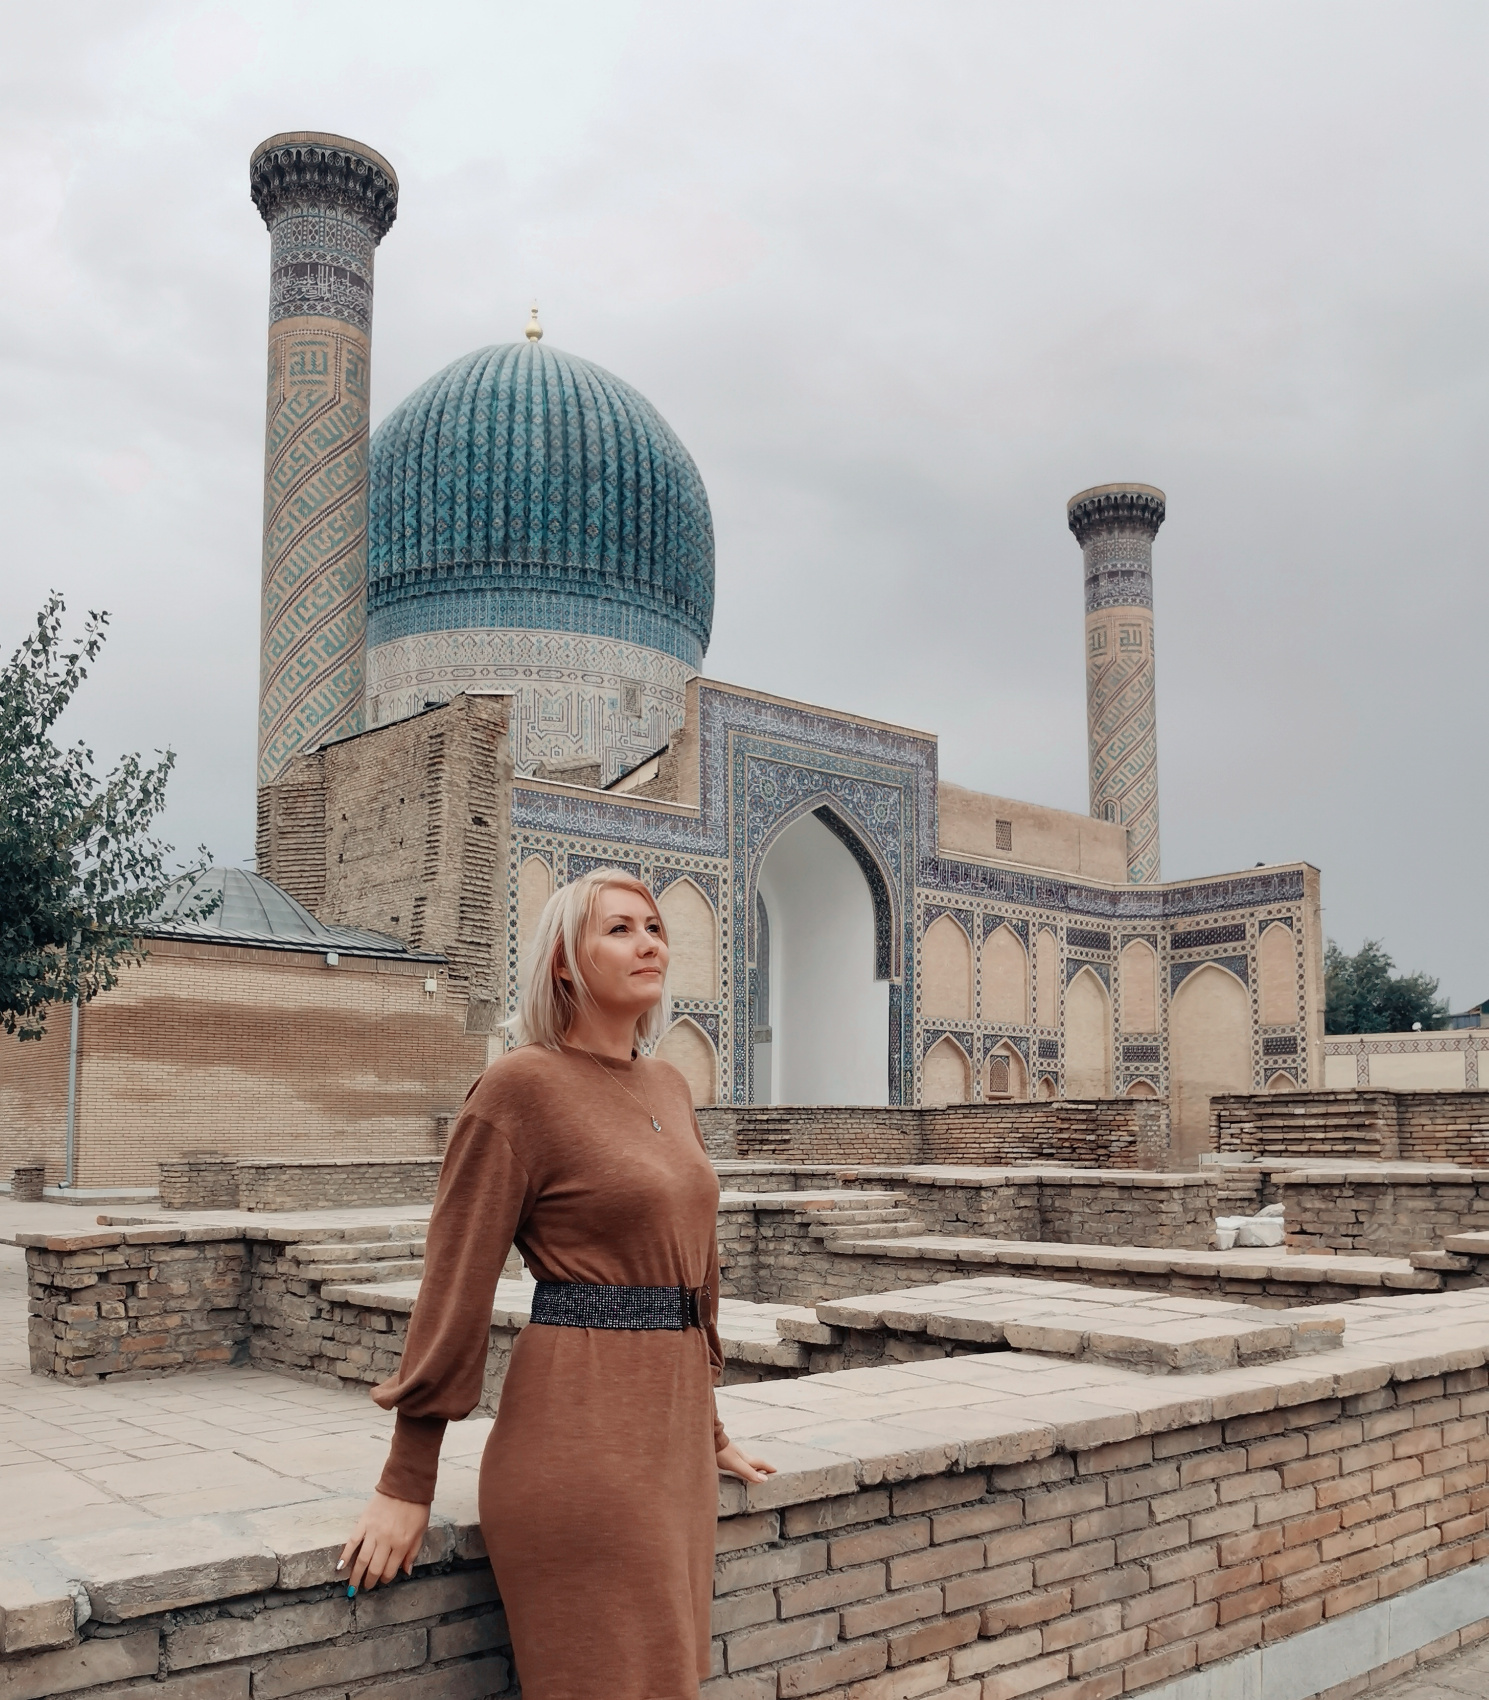 Khiva-Uzbekistan Tour - Tour to fortresses of ancient Khorezm.